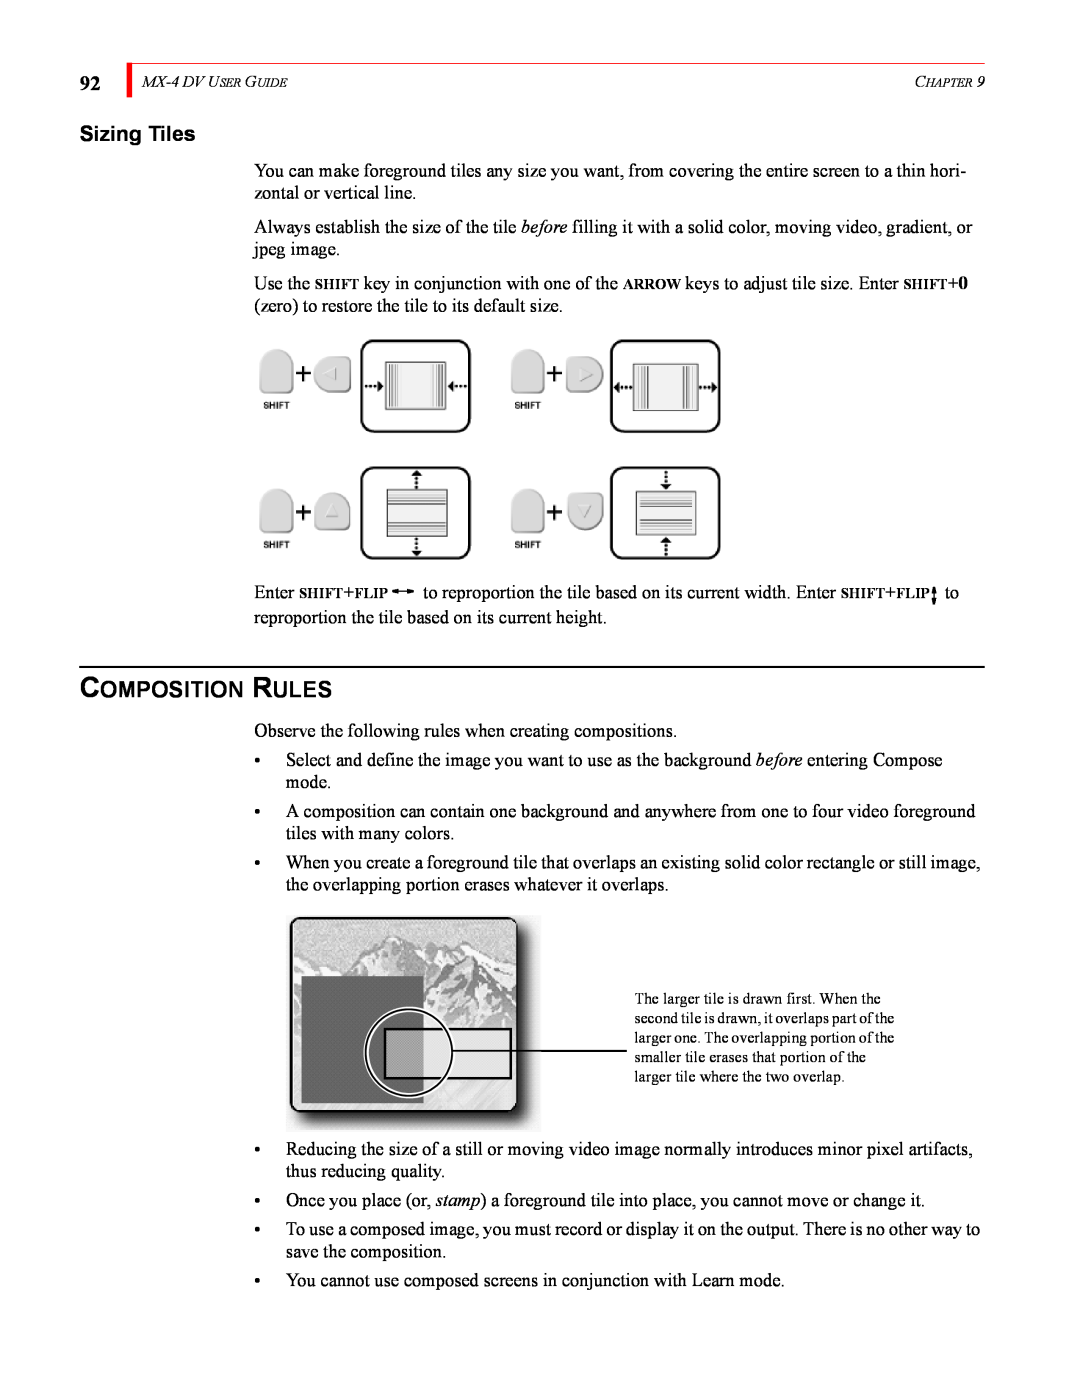 FOCUS Enhancements MX-4DV manual Composition Rules, Sizing Tiles 